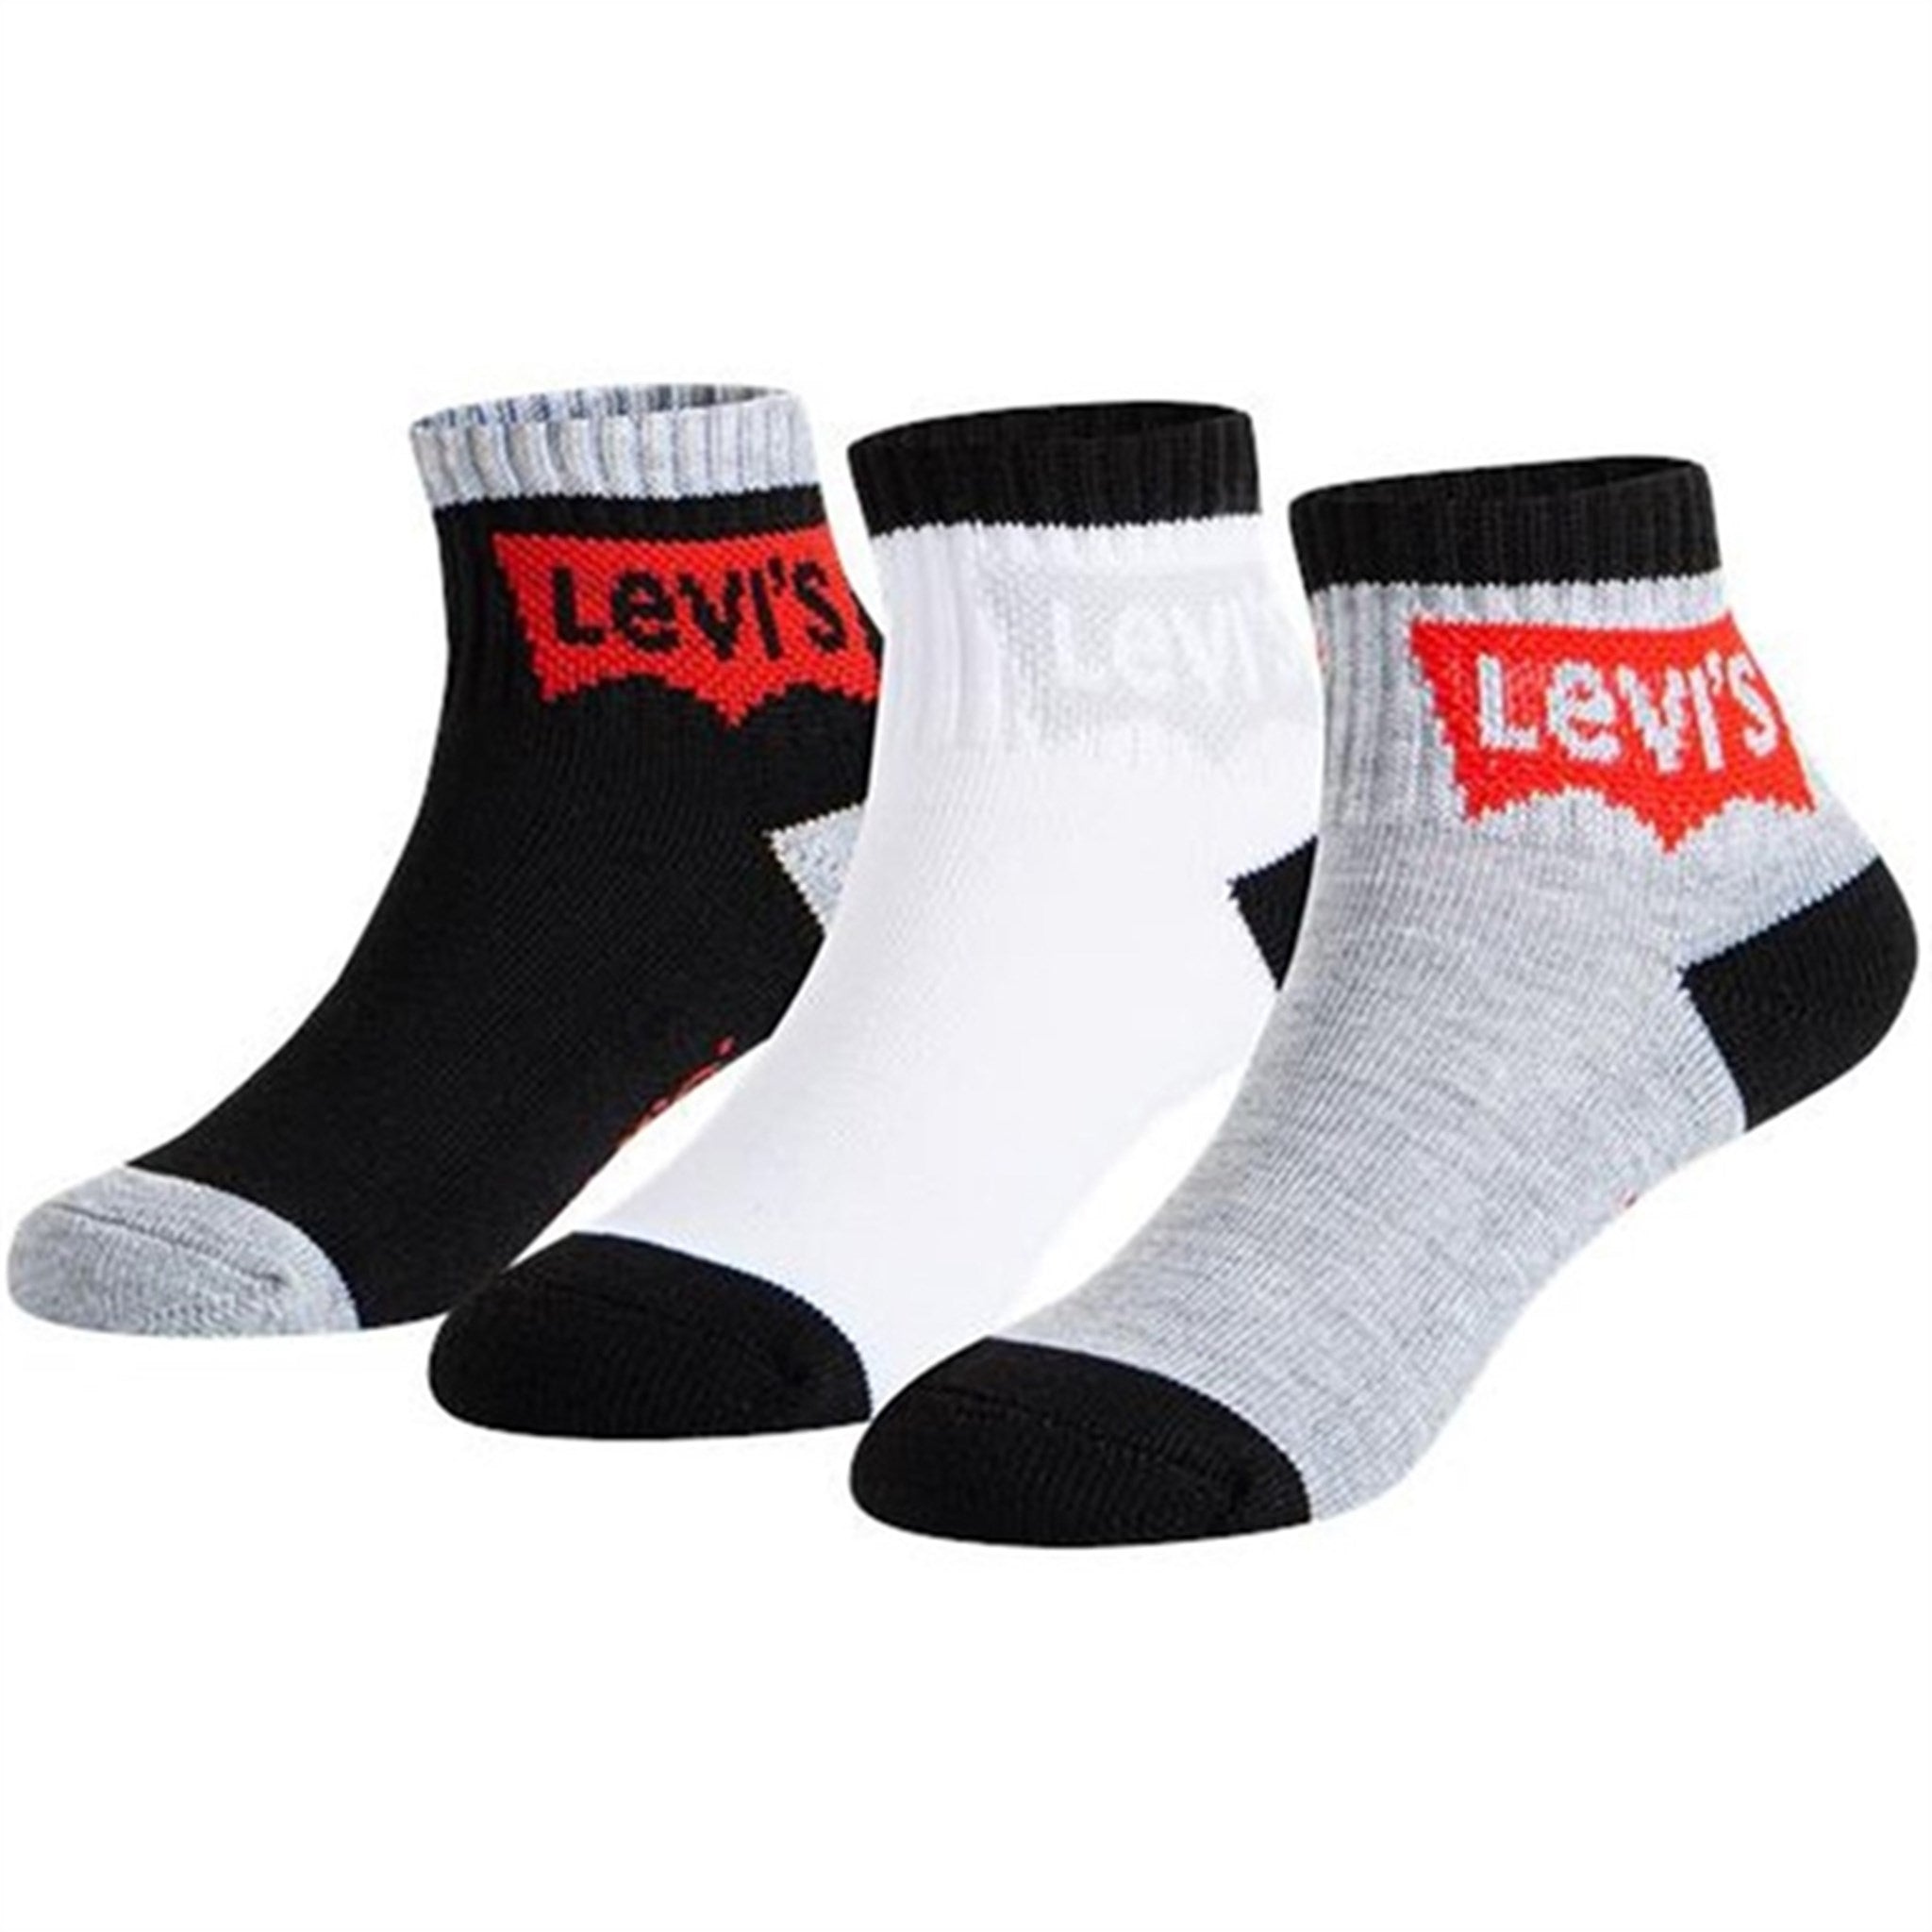 Levi's Crew Socks Batwing